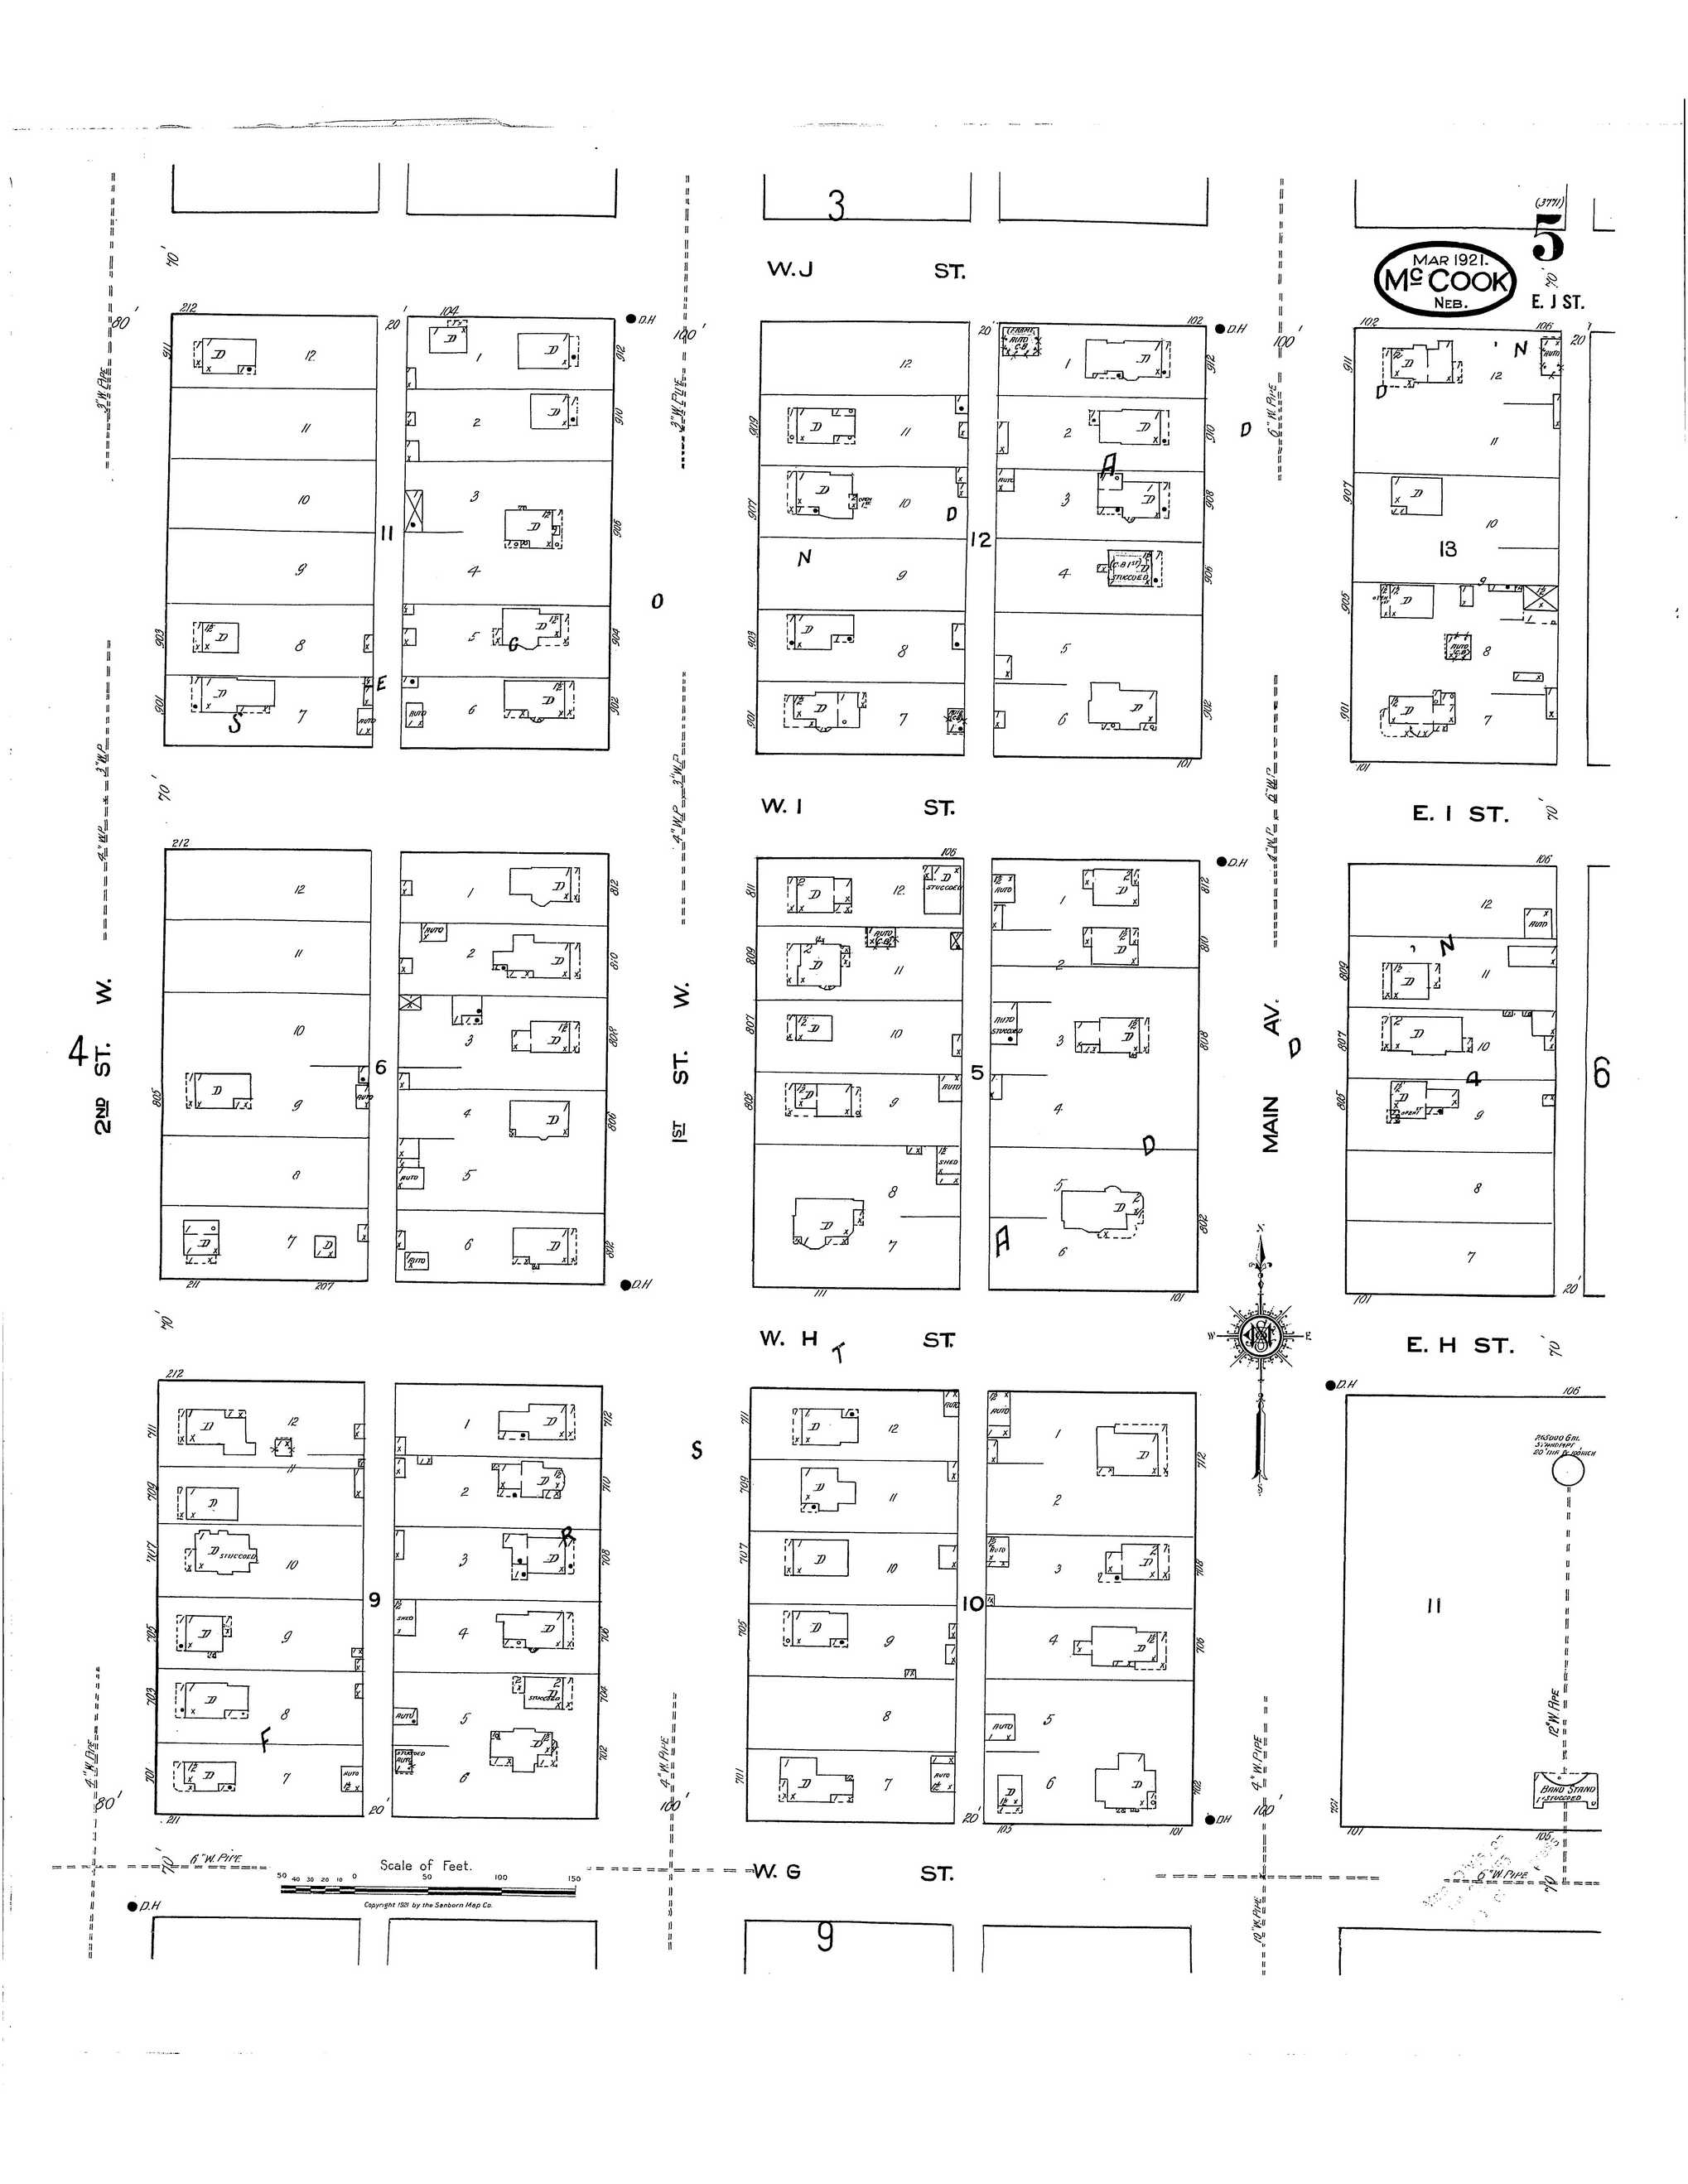 Sanborn map 1921 page 5